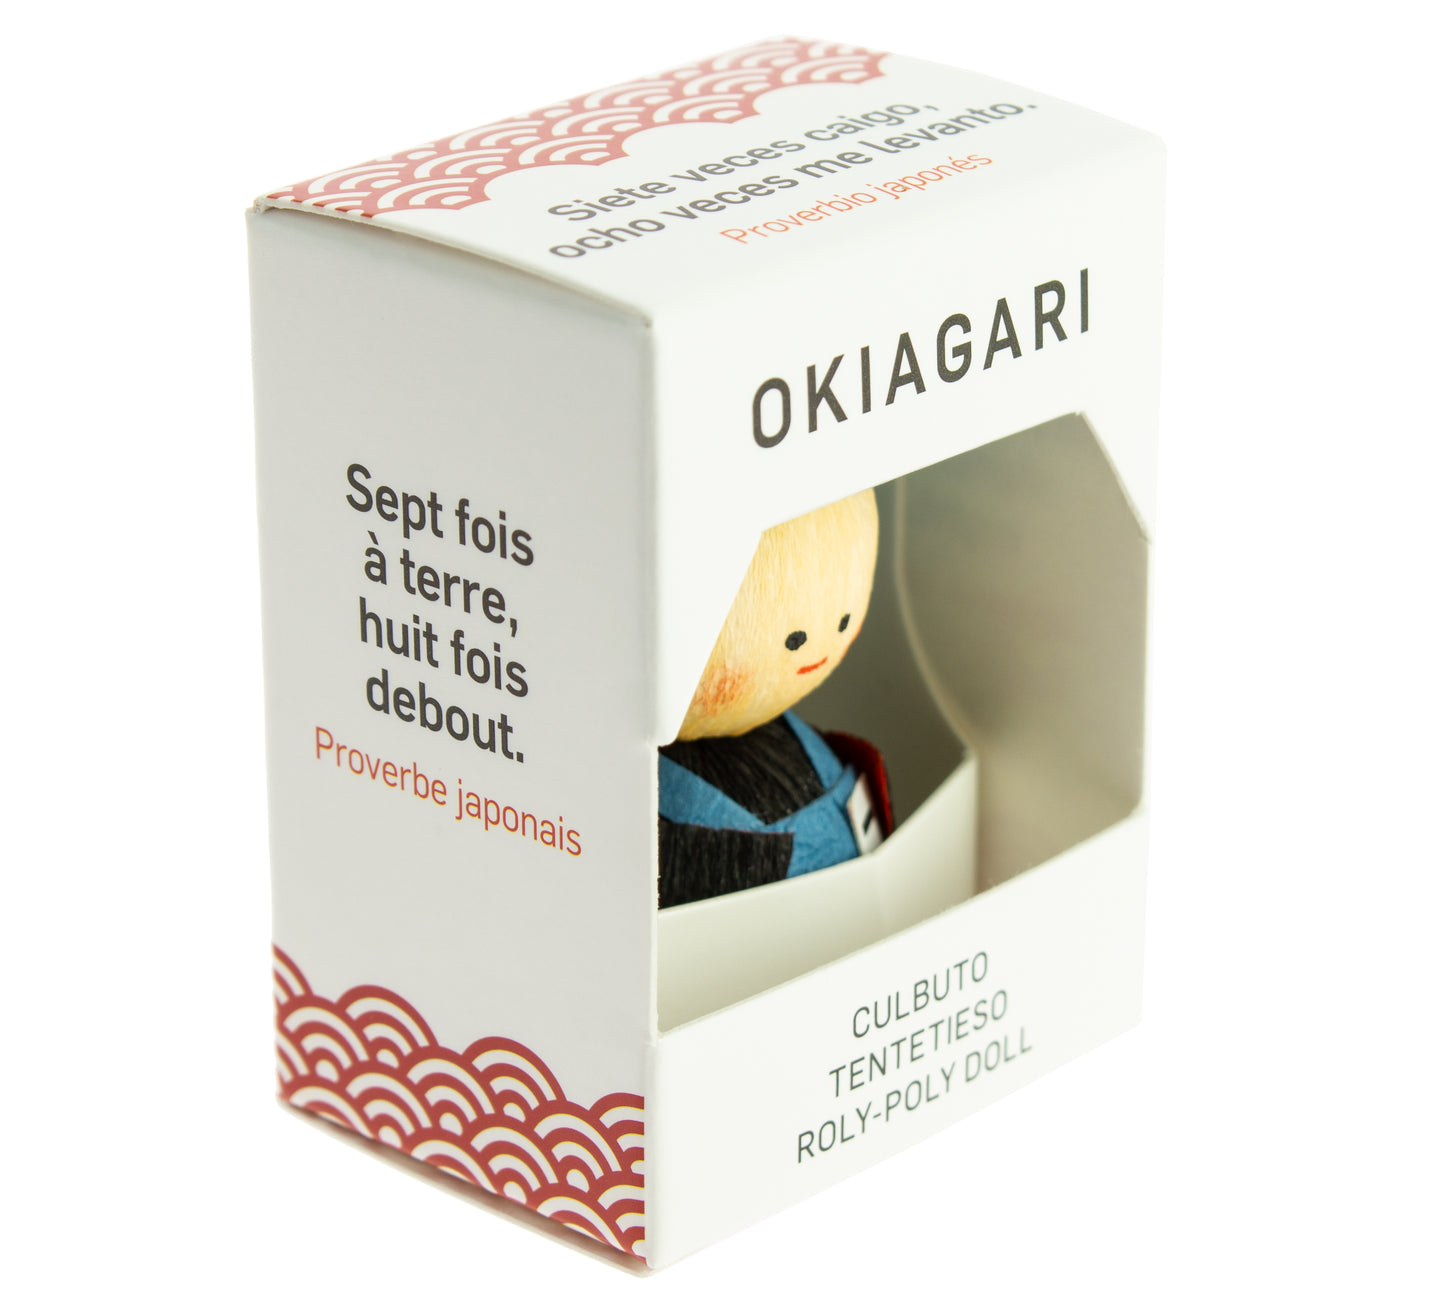 Okiagari Roly-poly Doll - Ikkyu-San Monk